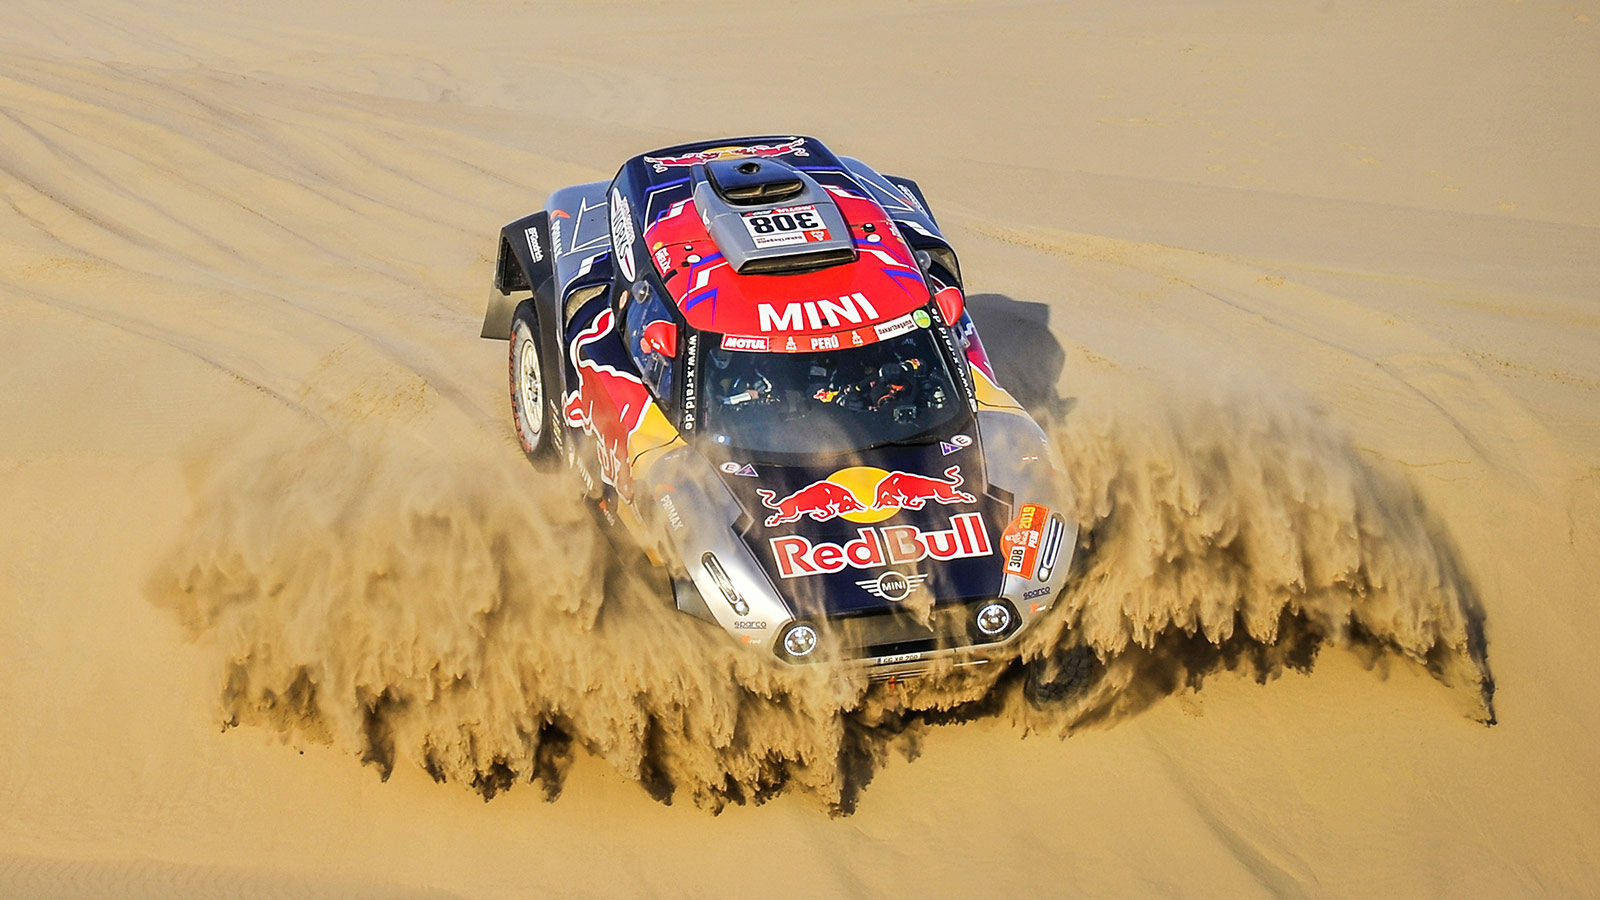 Rallye: Dakar Rally wechselt nach Saudi-Arabien